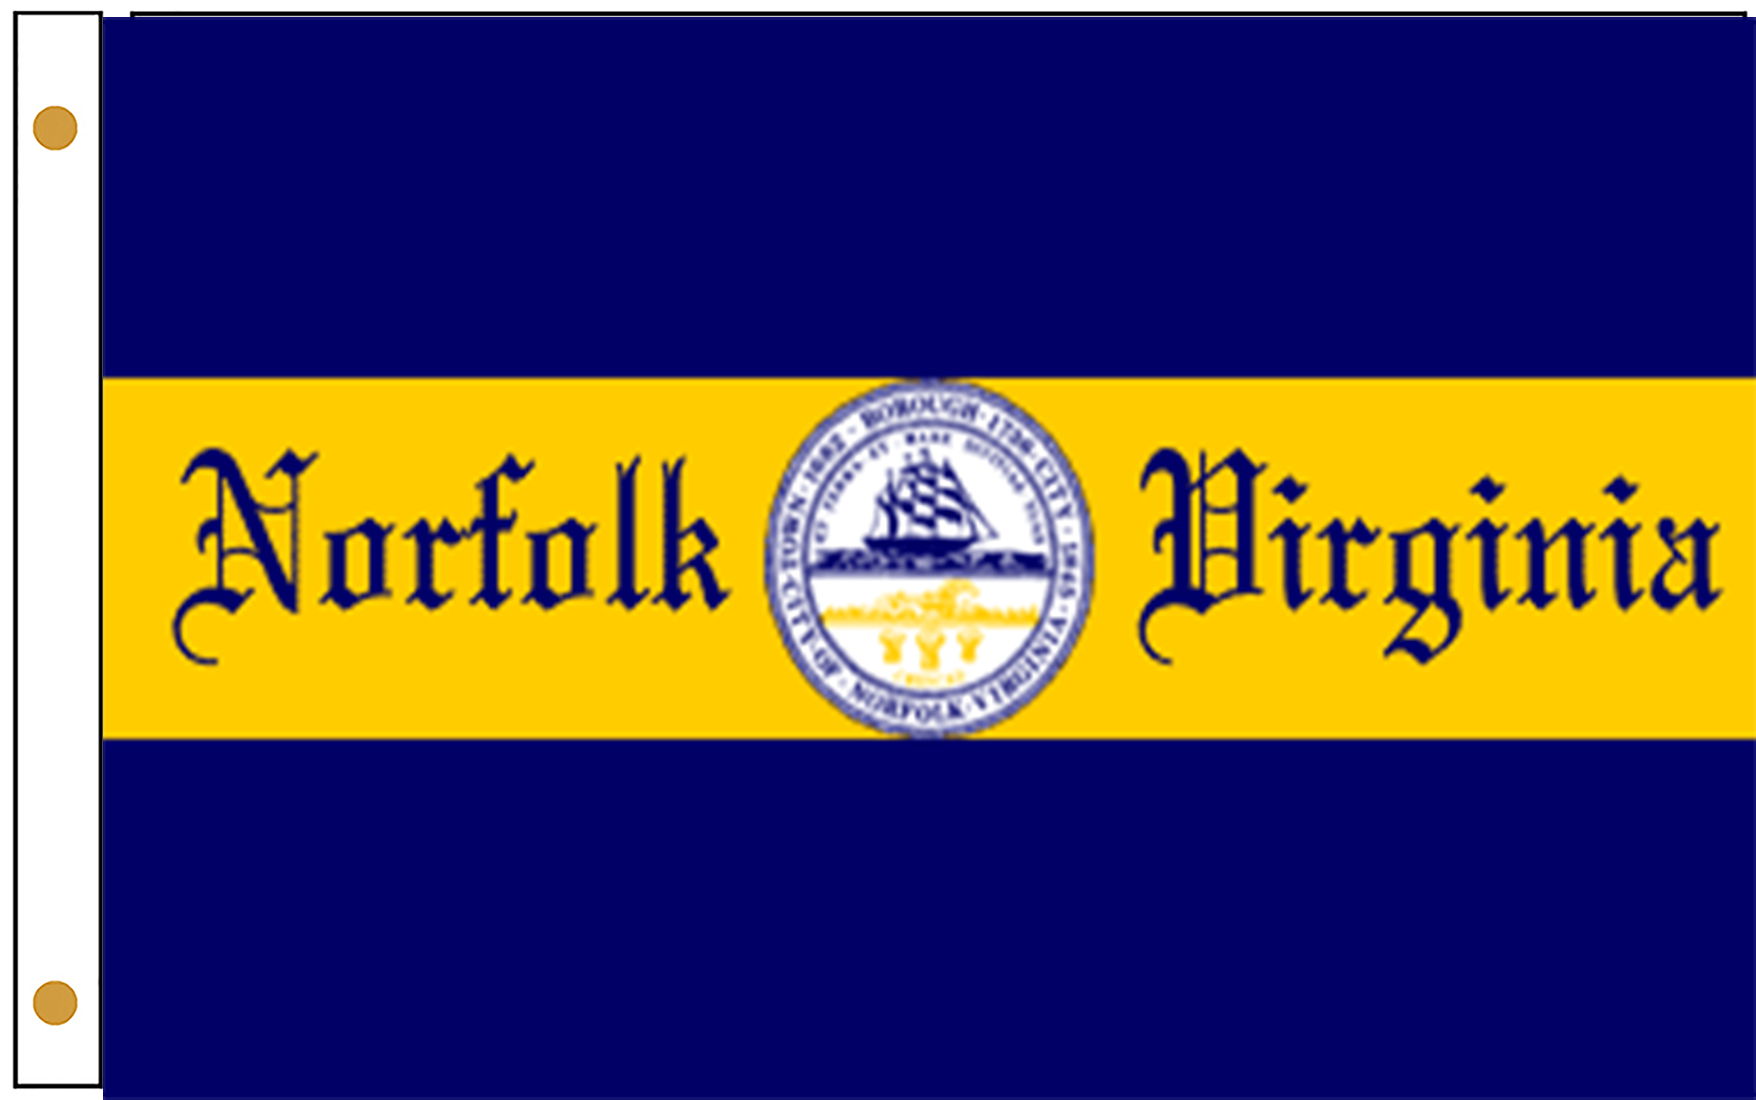 Norfolk VA Flags